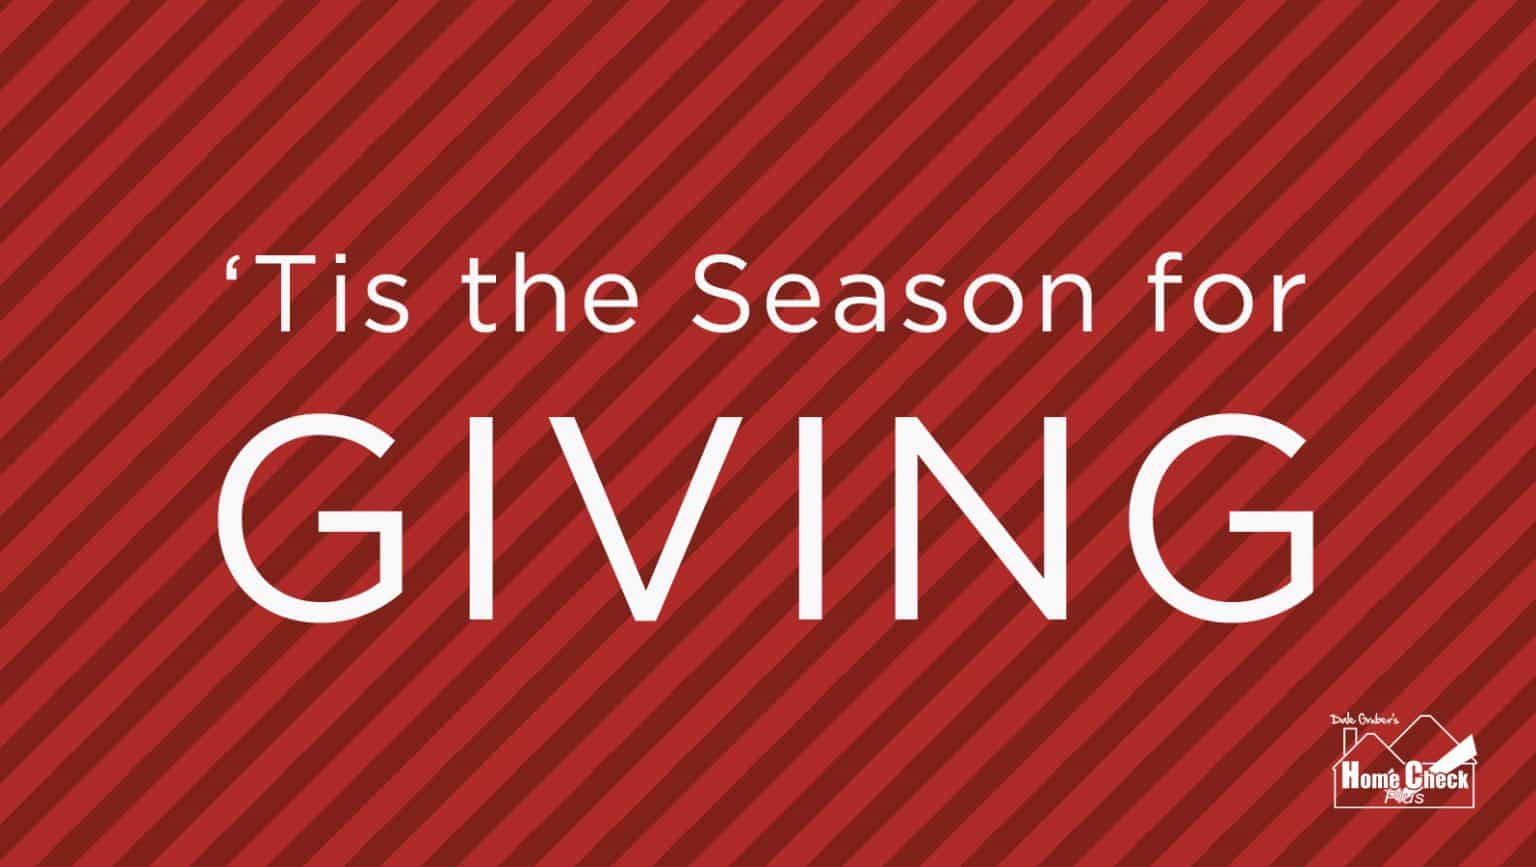 ‘Tis the Season for Giving!